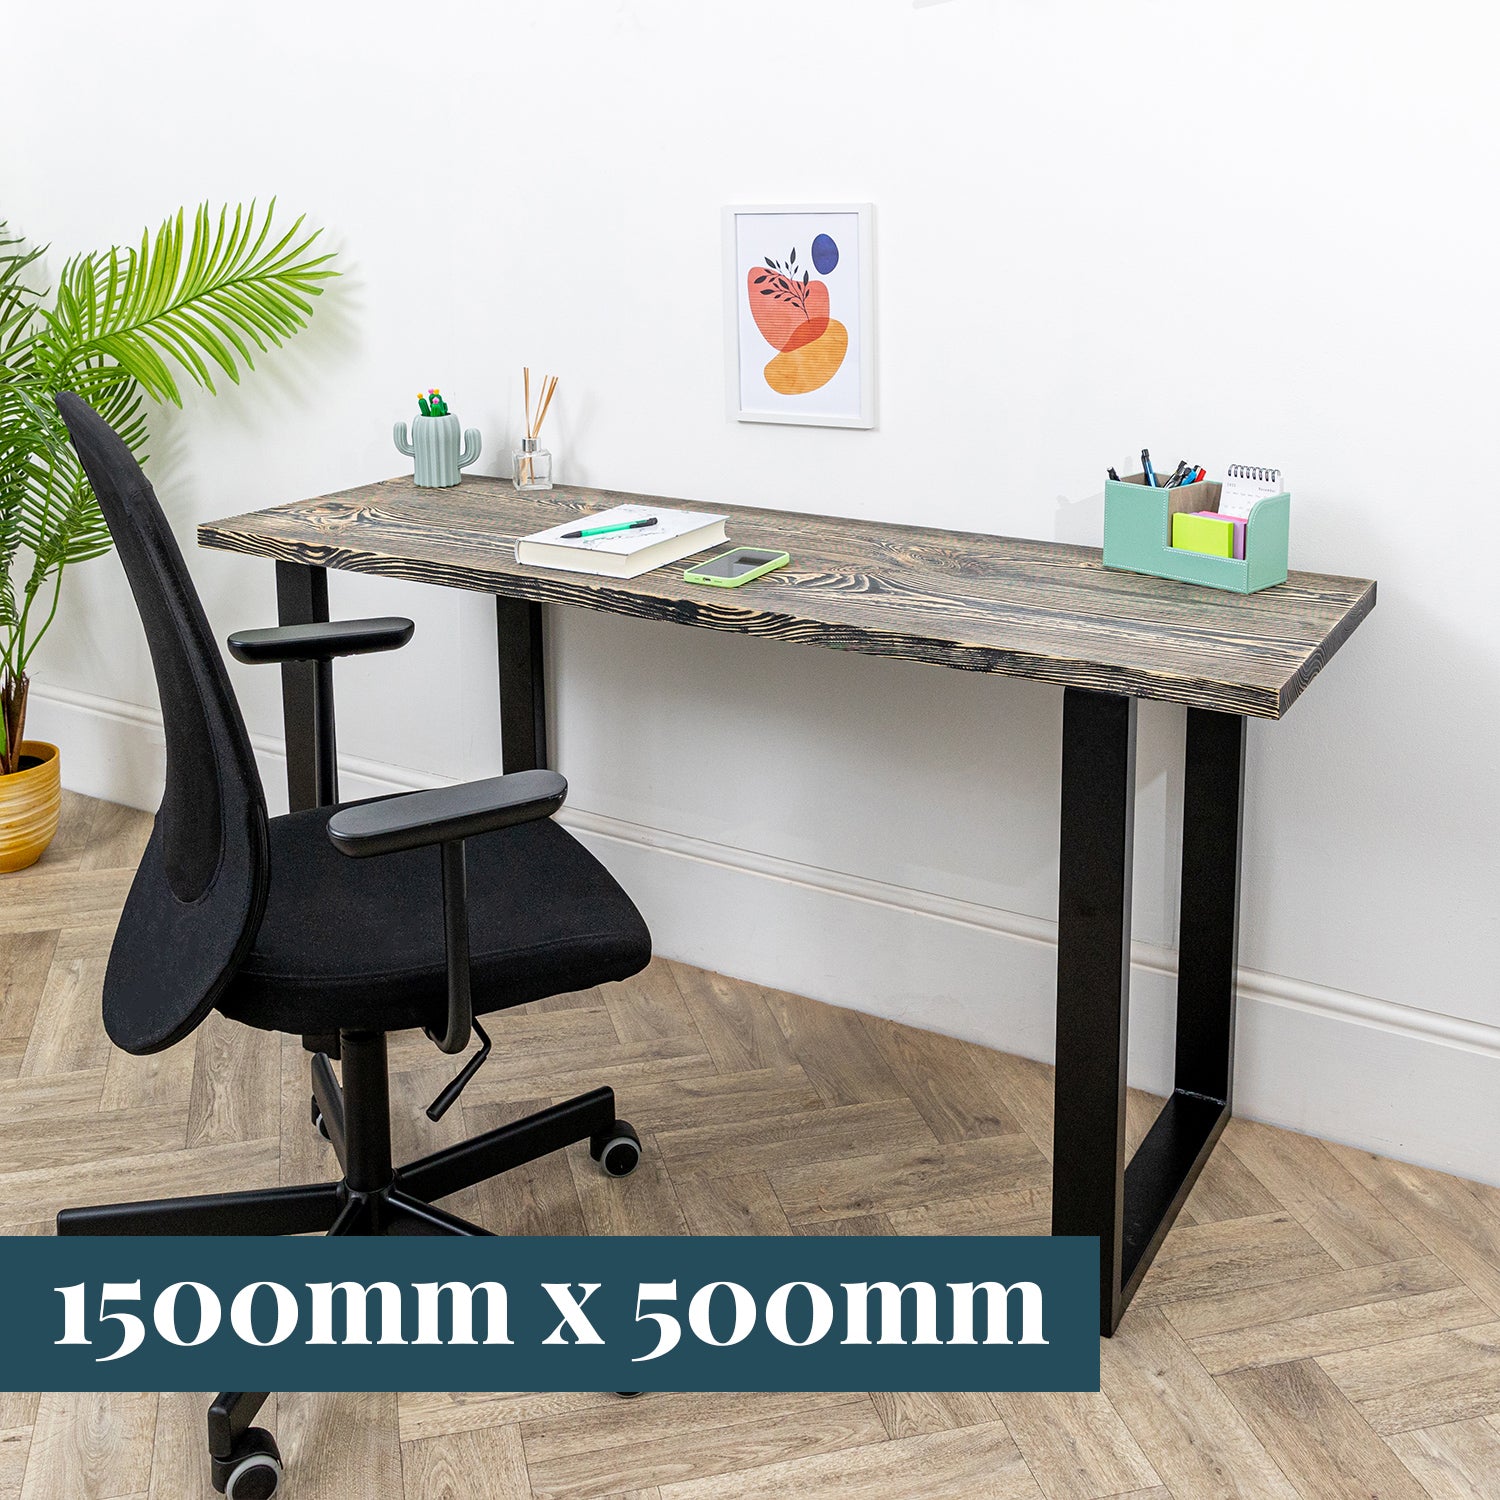 Black Wooden Desks with Industrial Metal Legs #length_1500mm depth_500mm